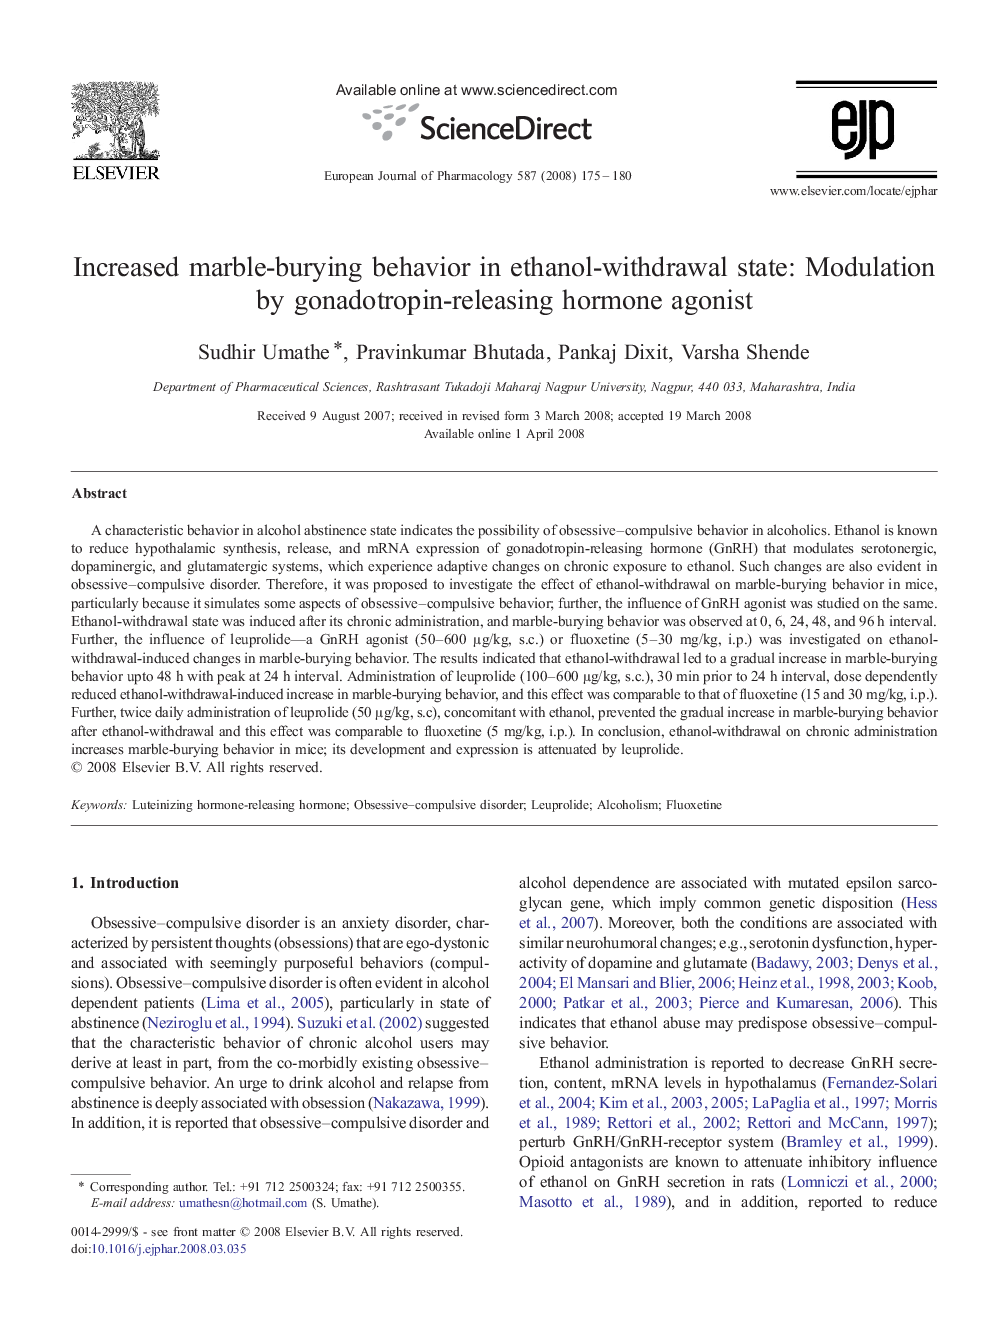 Increased marble-burying behavior in ethanol-withdrawal state: Modulation by gonadotropin-releasing hormone agonist